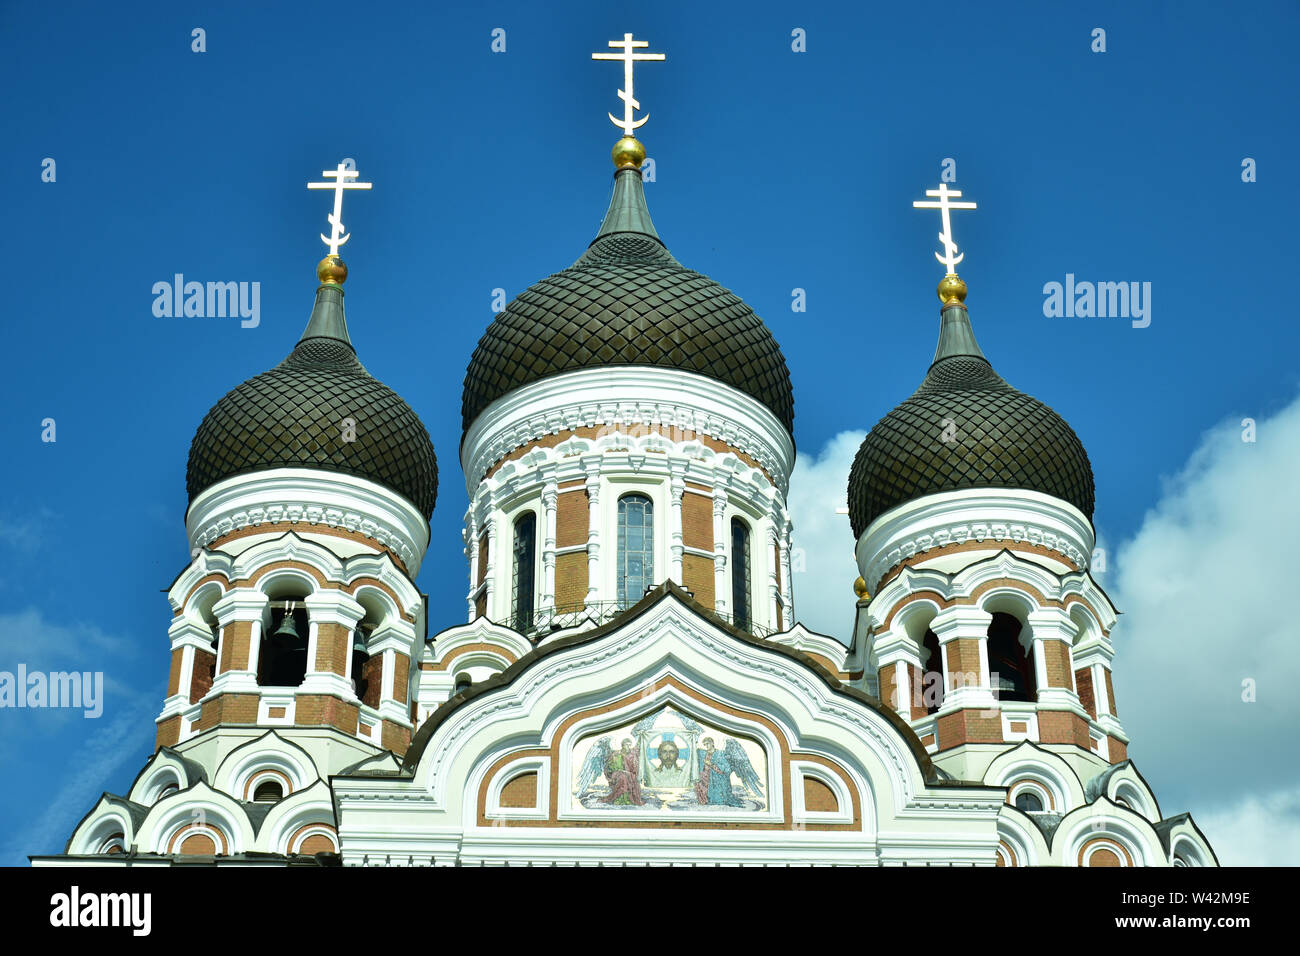 Alexander Nevsky Cathedral - Tallinn - Estonia Stock Photo